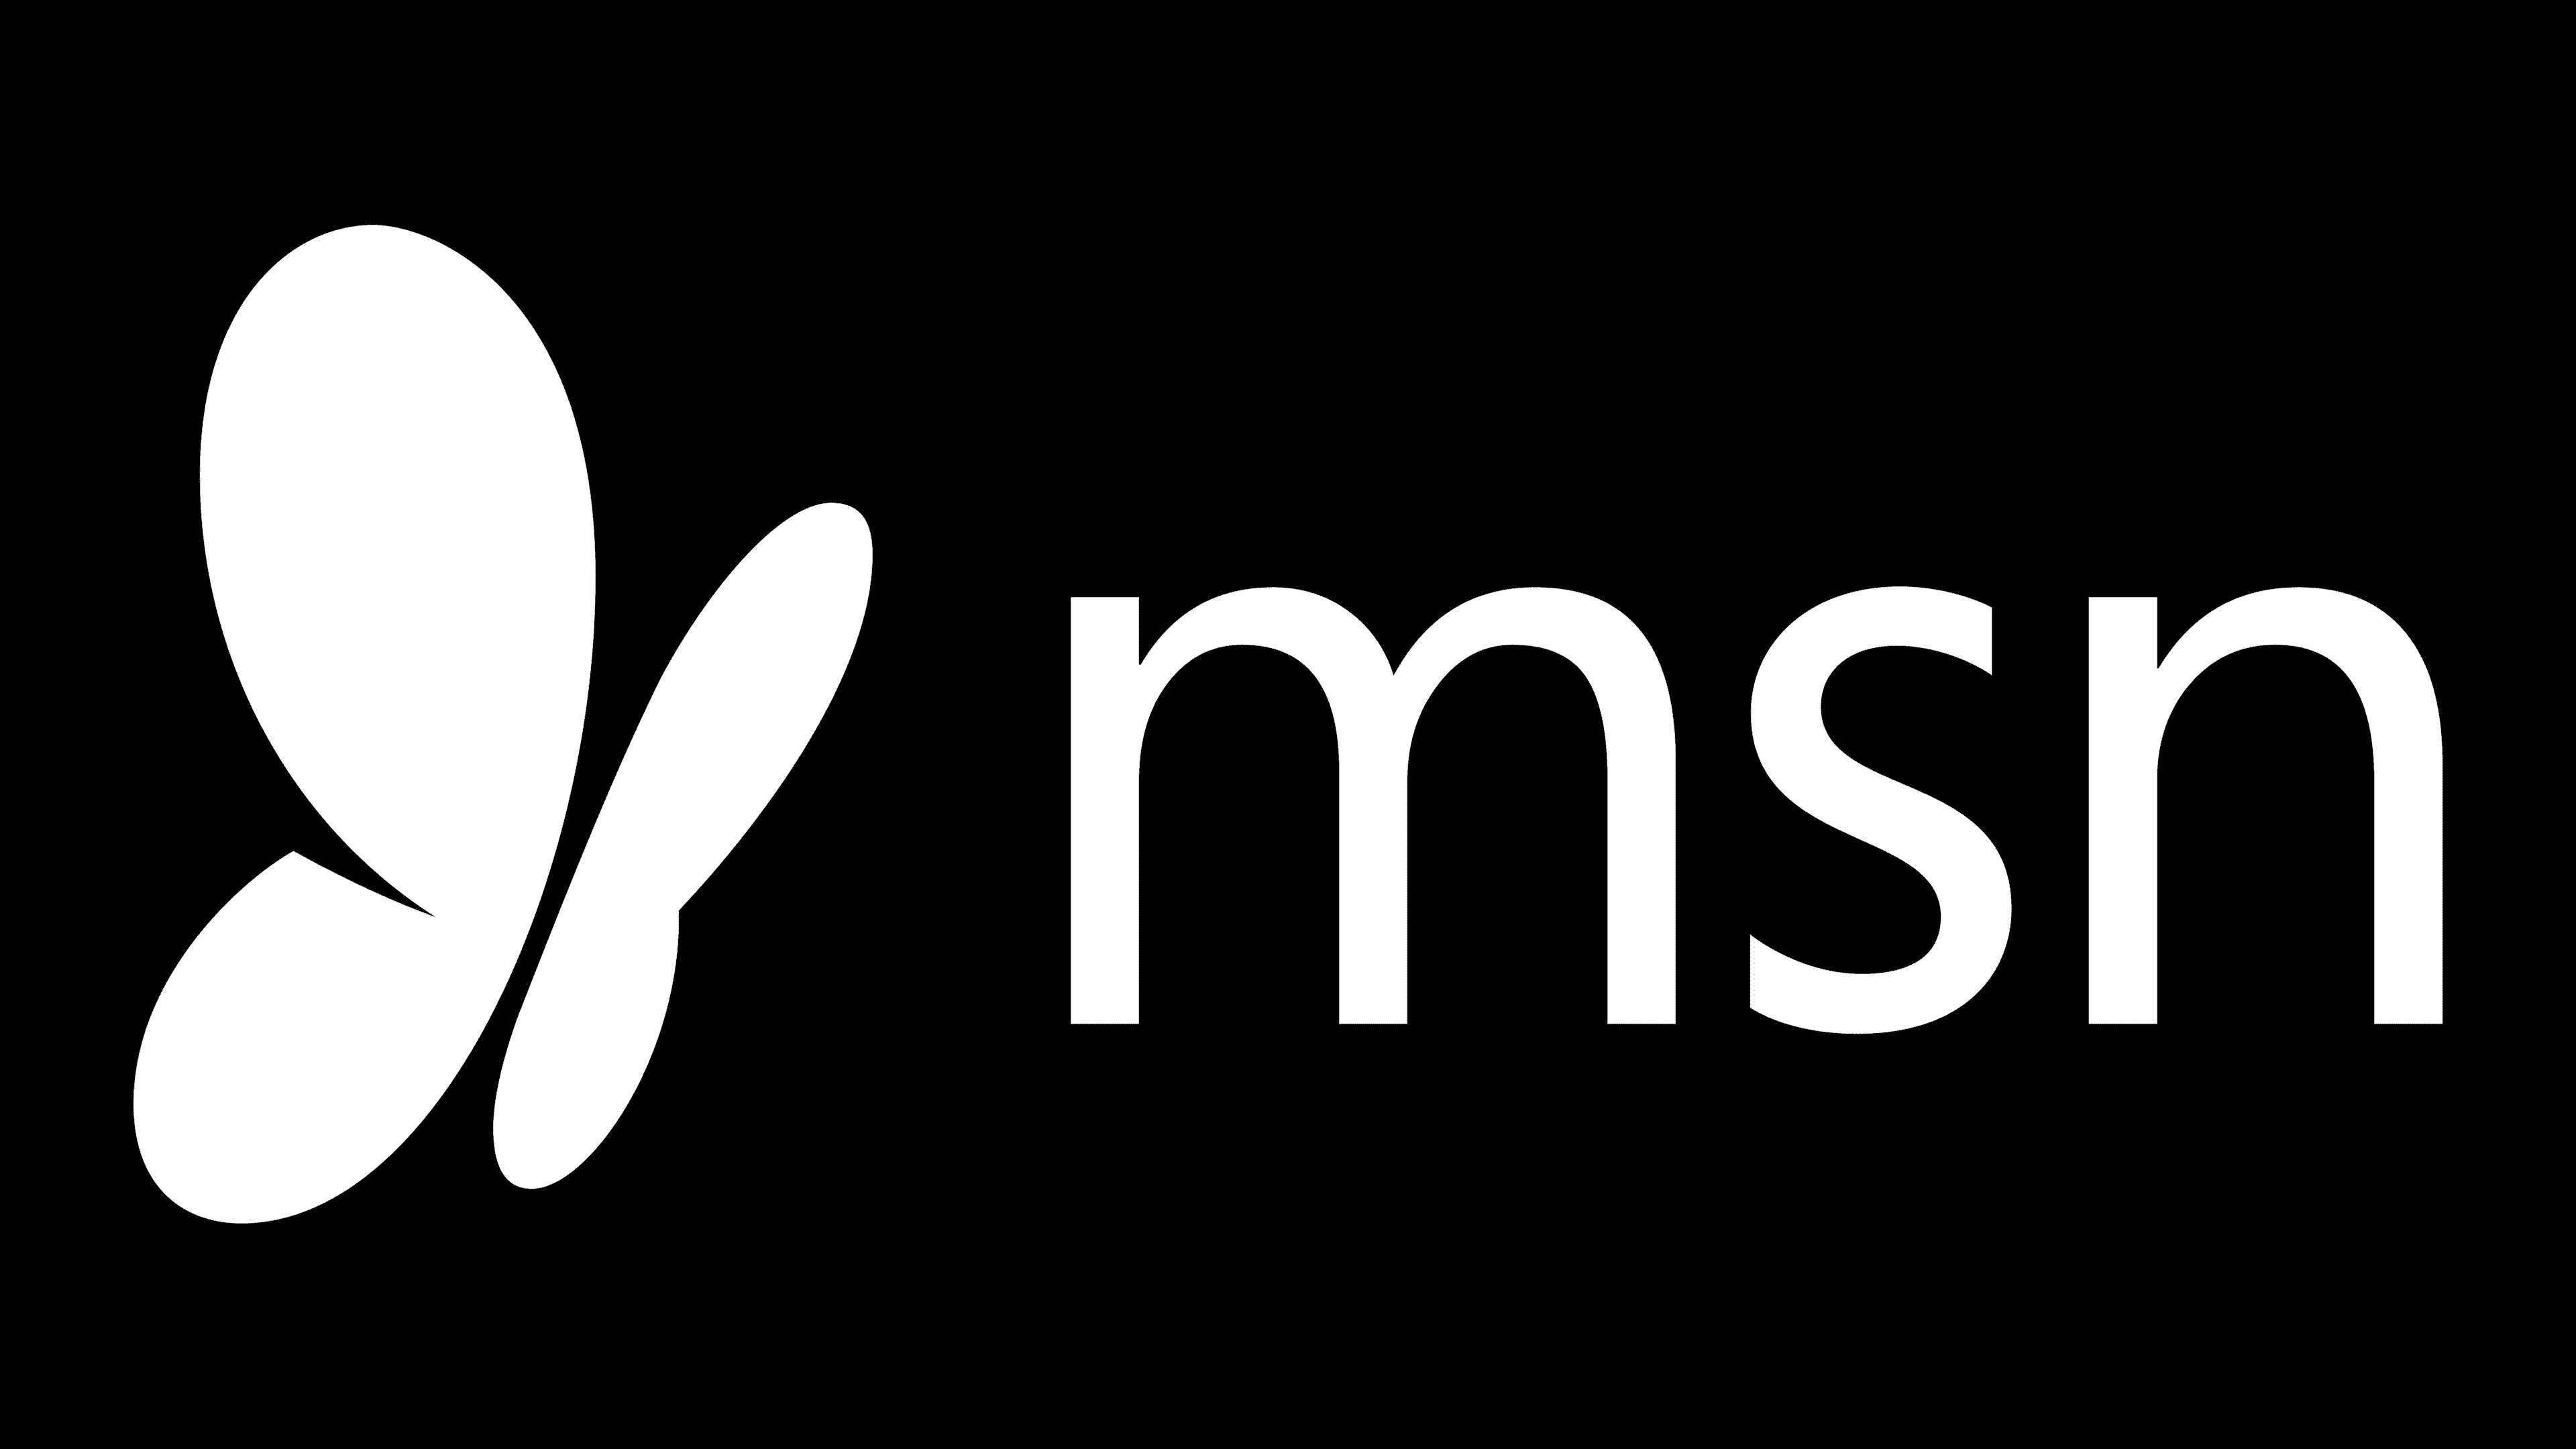 Microsoft msn. Msn. МСН логотип. Поисковая система msn. Логотип msn (Microsoft Network).